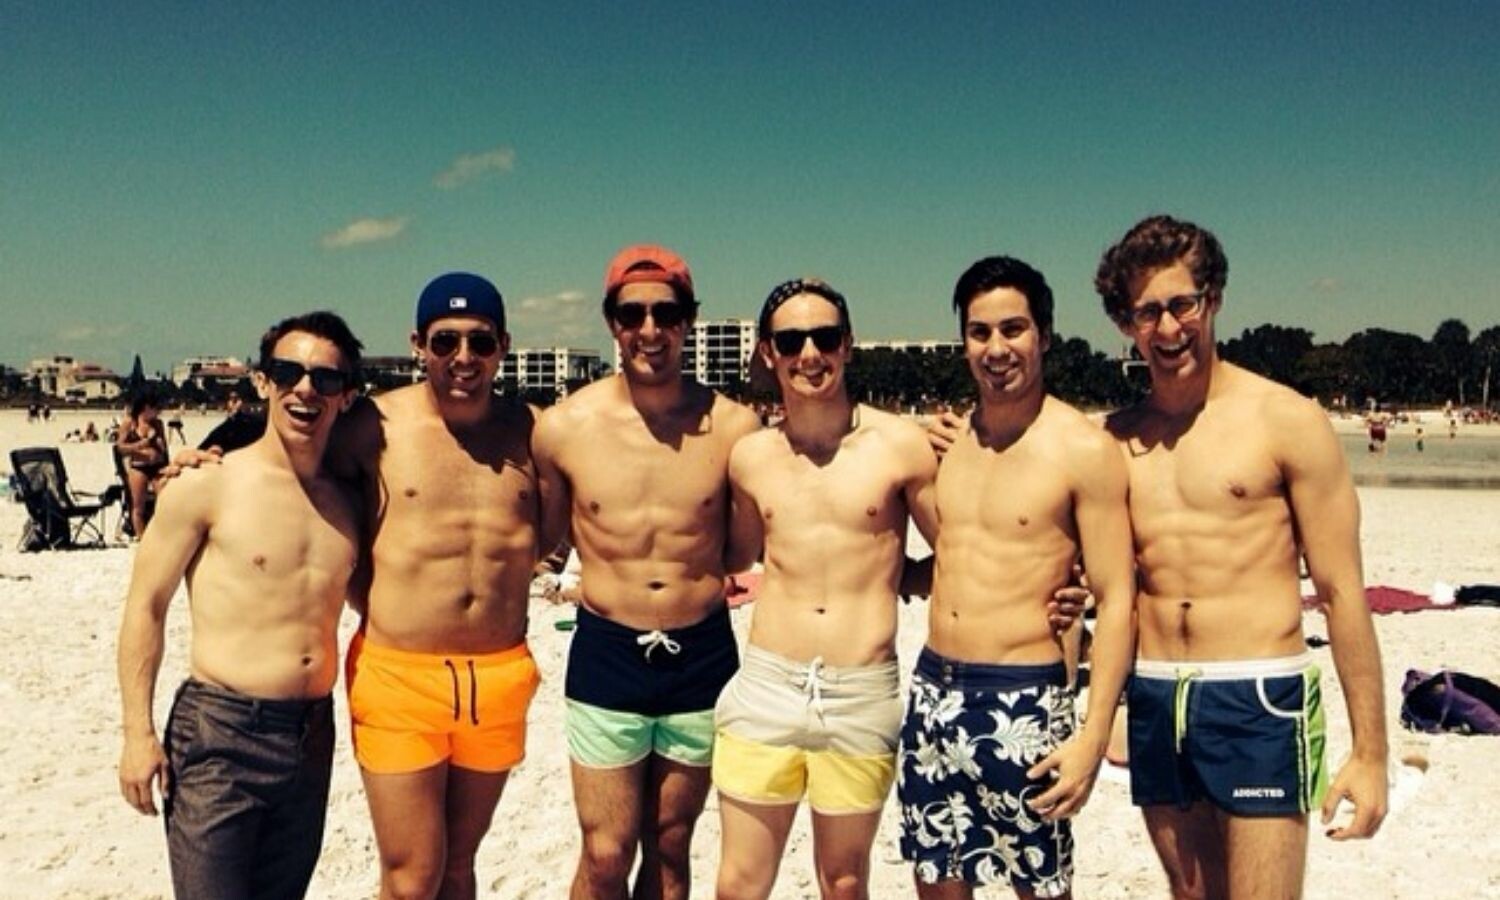 Six shirtless men in swim trunks at the beach.